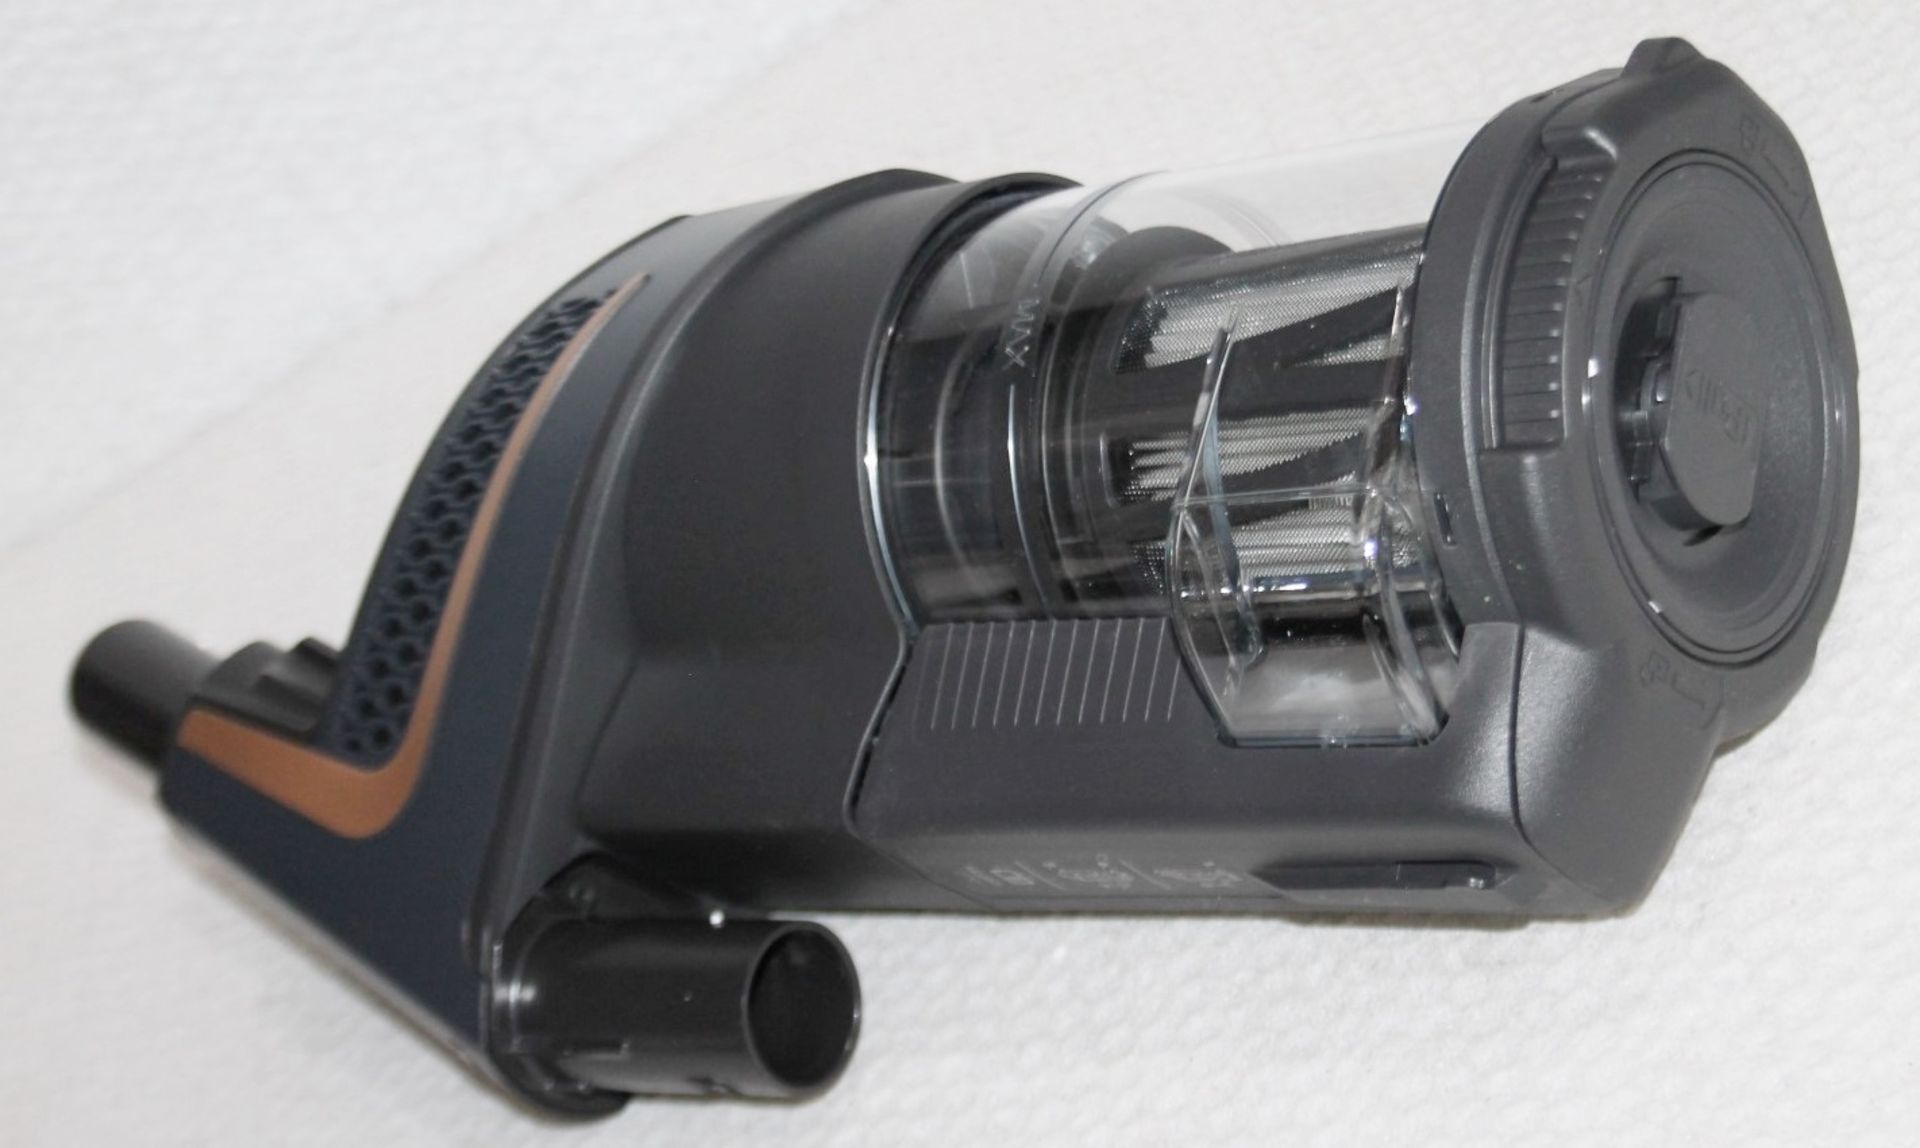 1 x MIELE Triflex HX1 Pro Cordless Vacuum Cleaner - Original Price £580.00 - Boxed Stock - Image 12 of 28